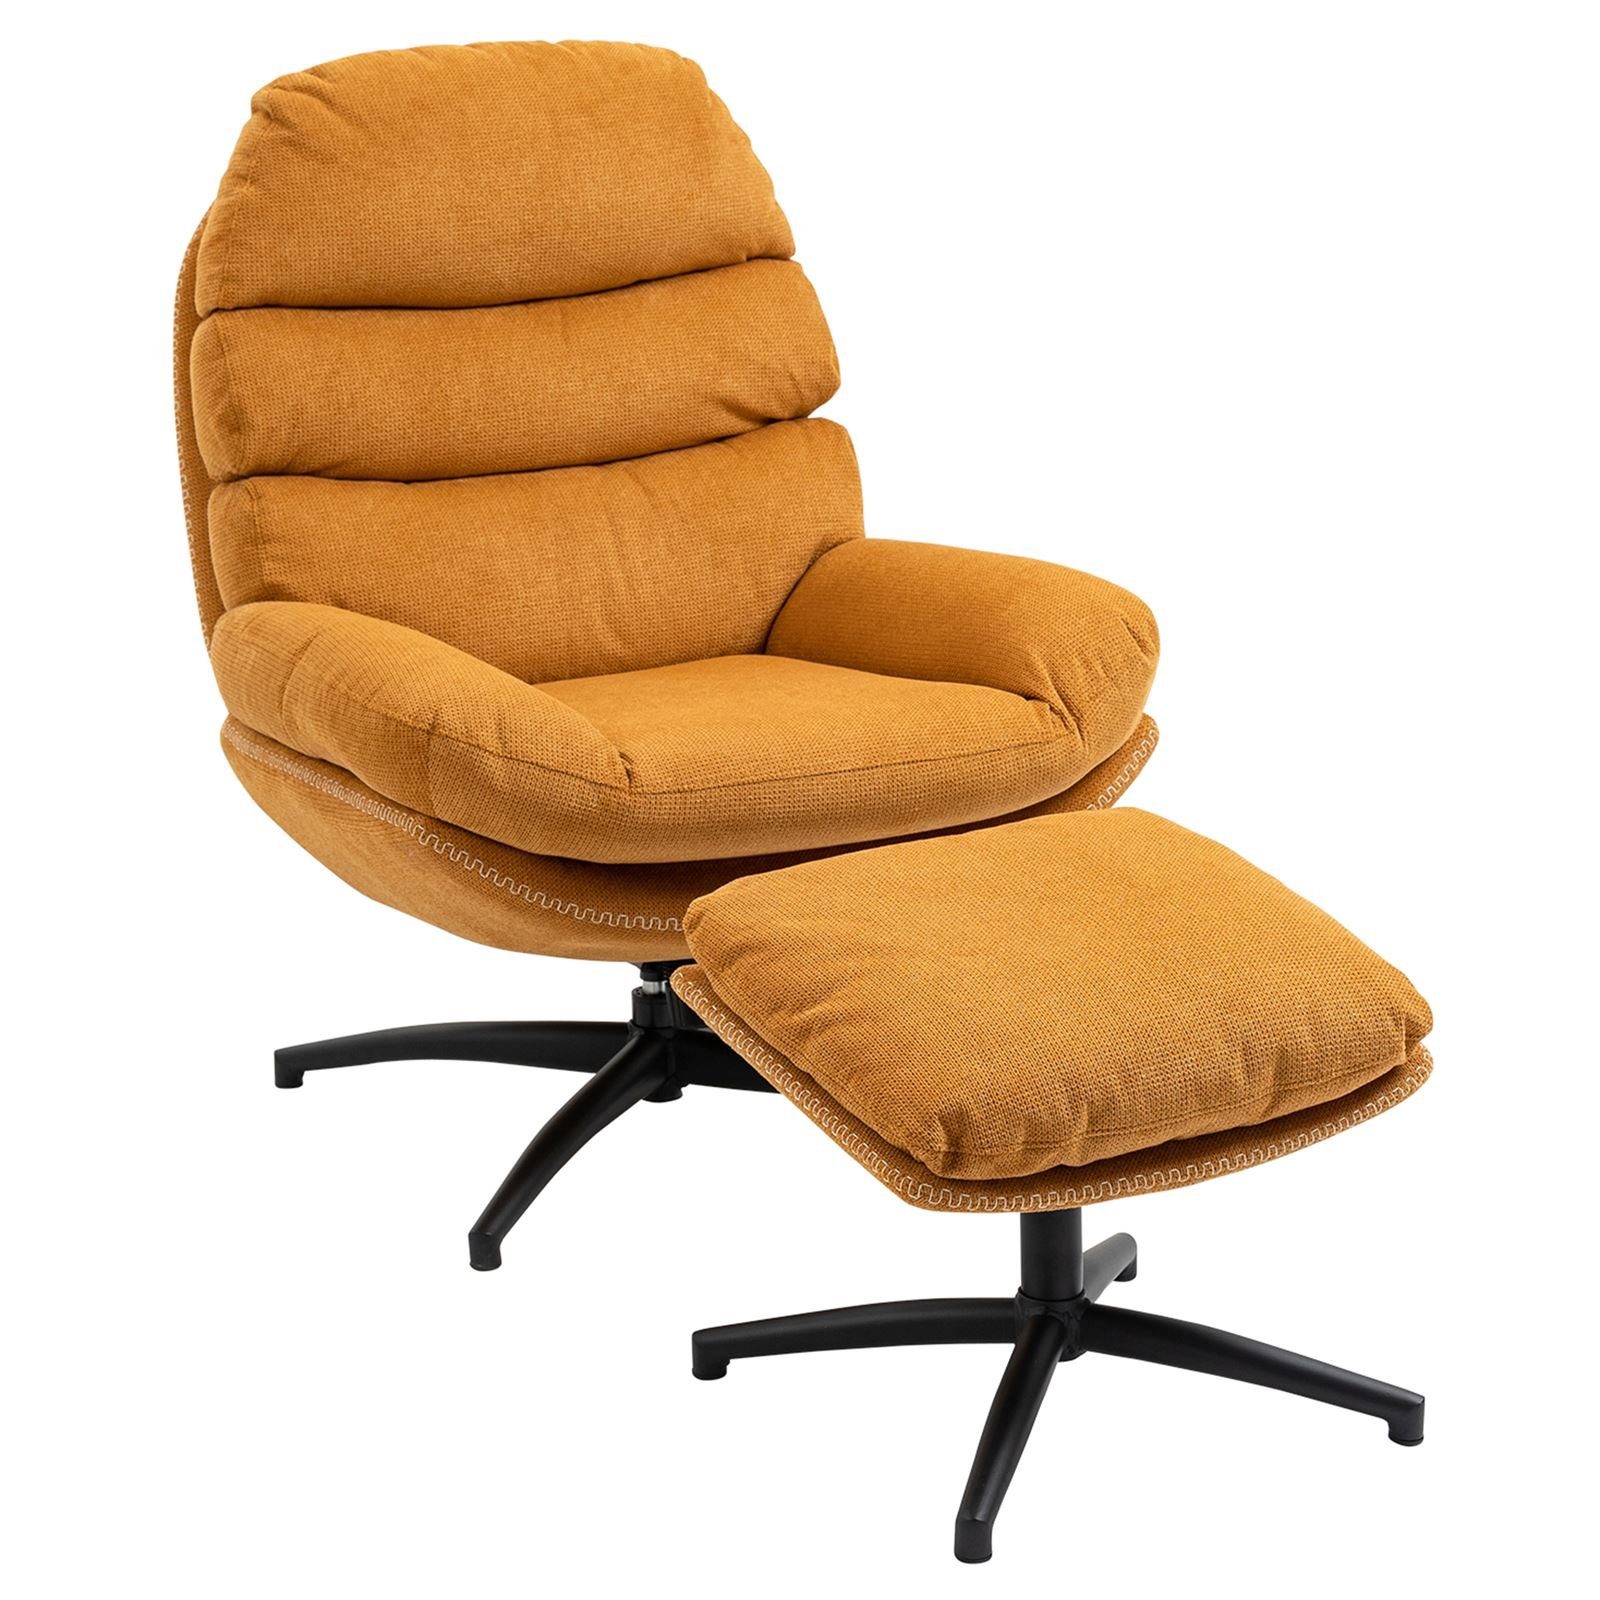 CARO-Möbel Relaxsessel, Relaxsessel mit Hocker Polstersessel Wohnzimmer Metall Stoff Modern orange